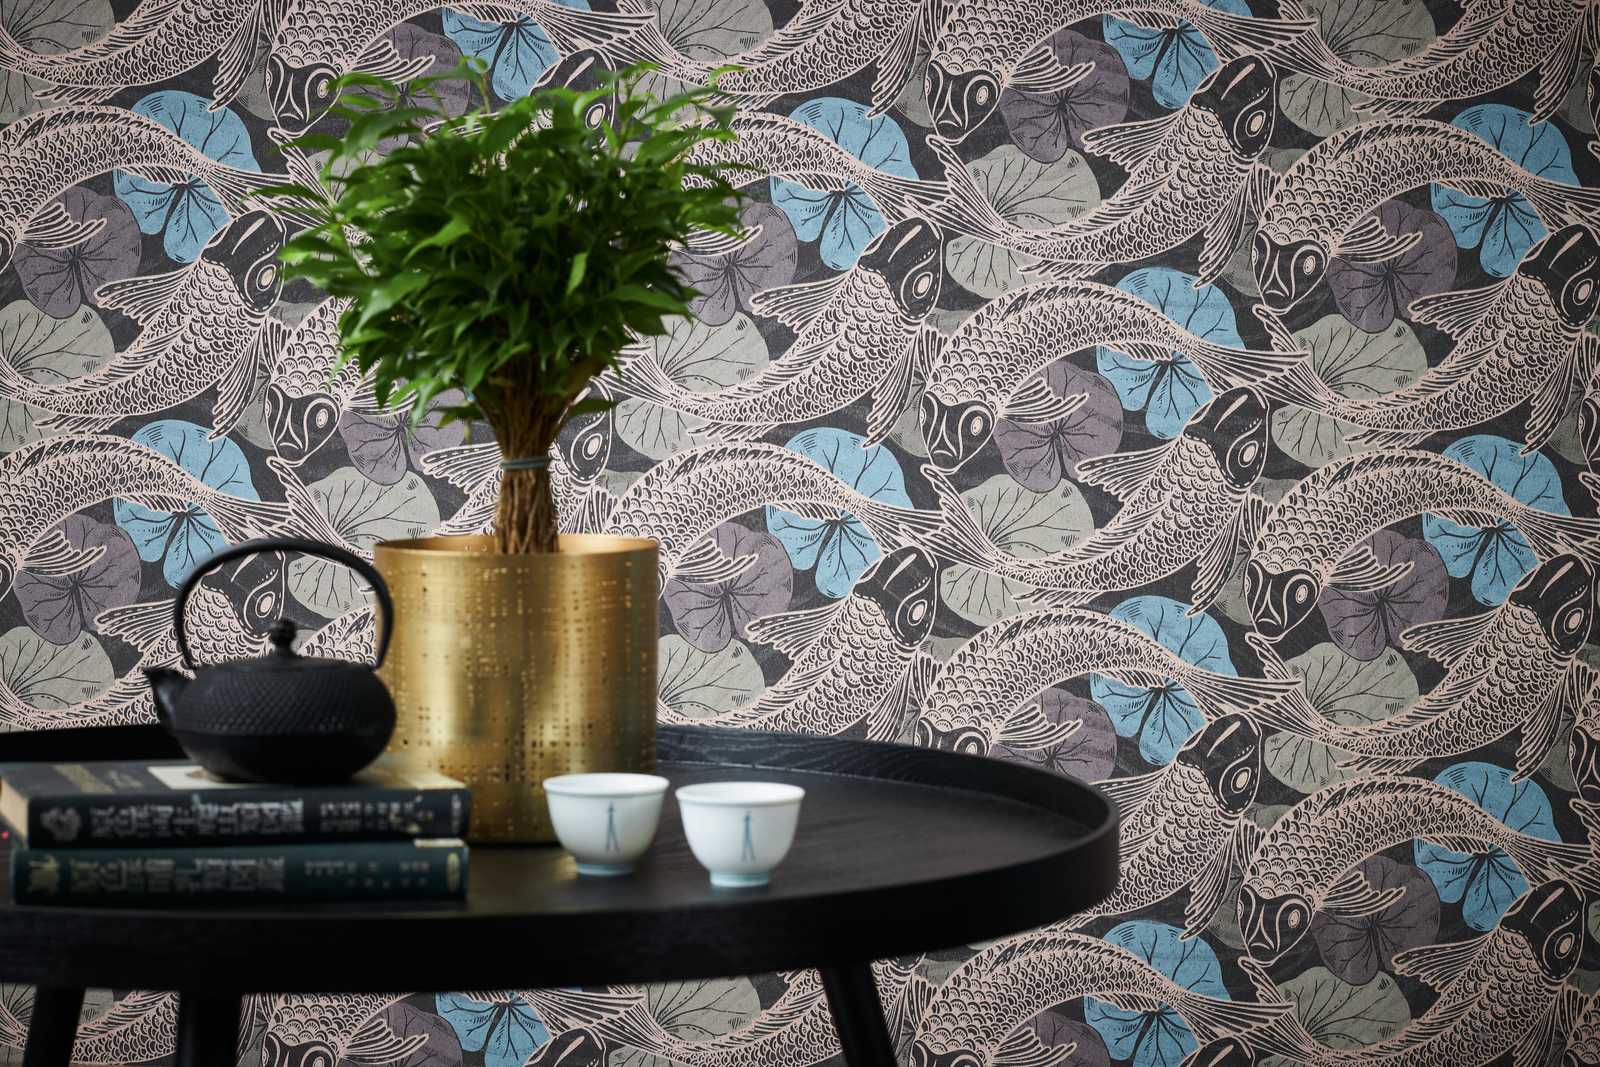             Papel pintado no tejido Diseño koi asiático con efecto metálico - azul, metálico, negro
        